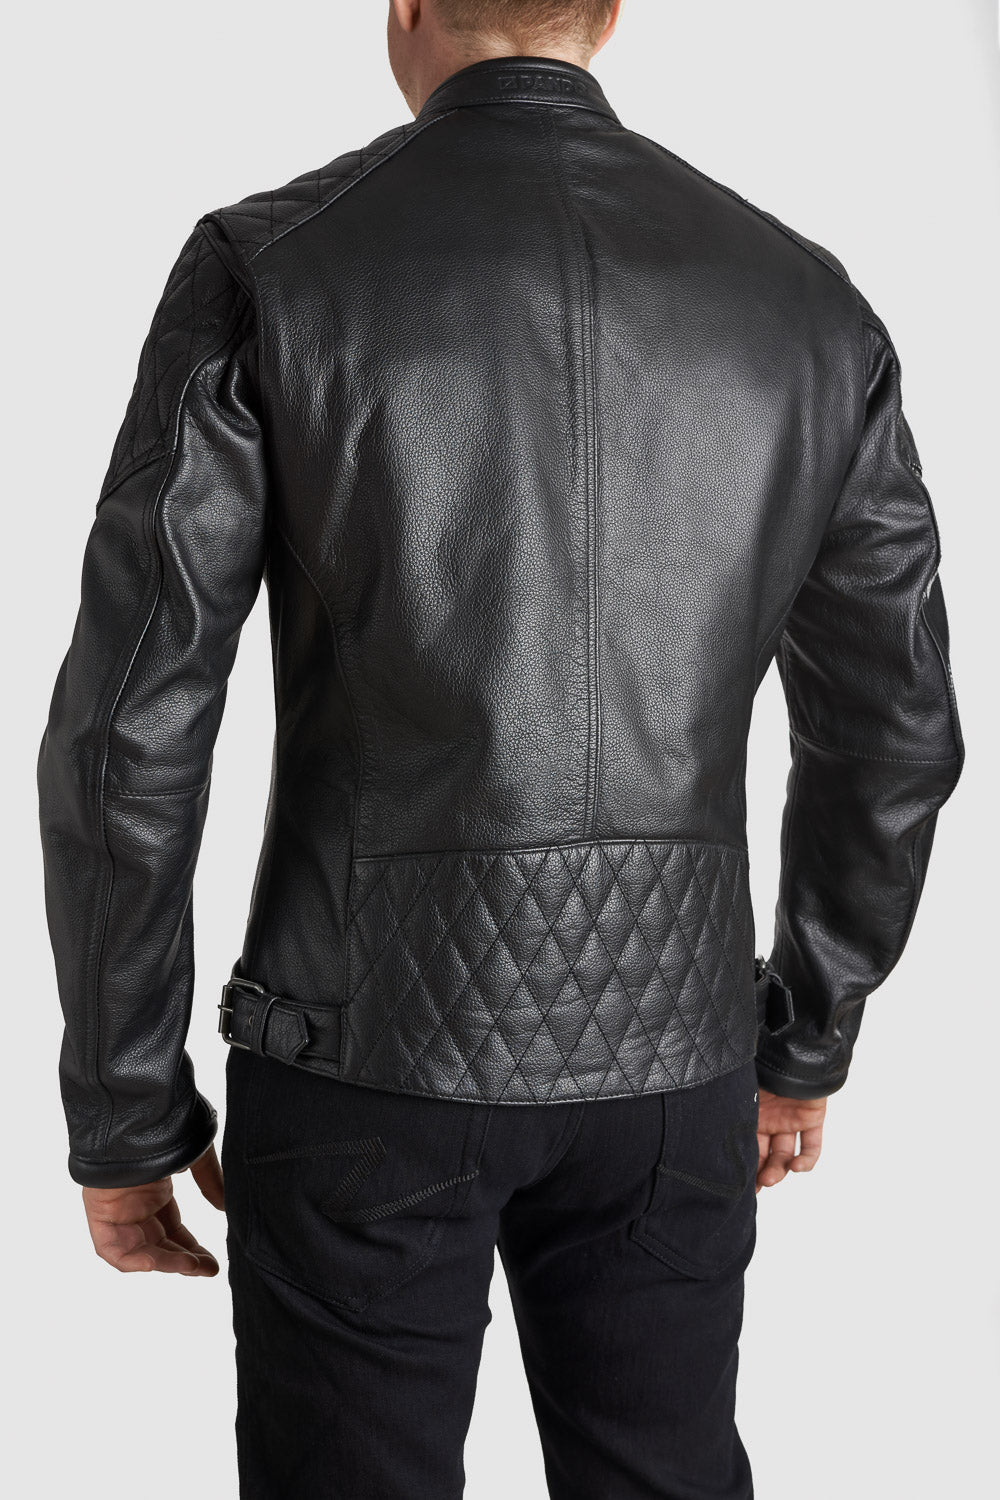 Pando Moto Twin Leather Jacket